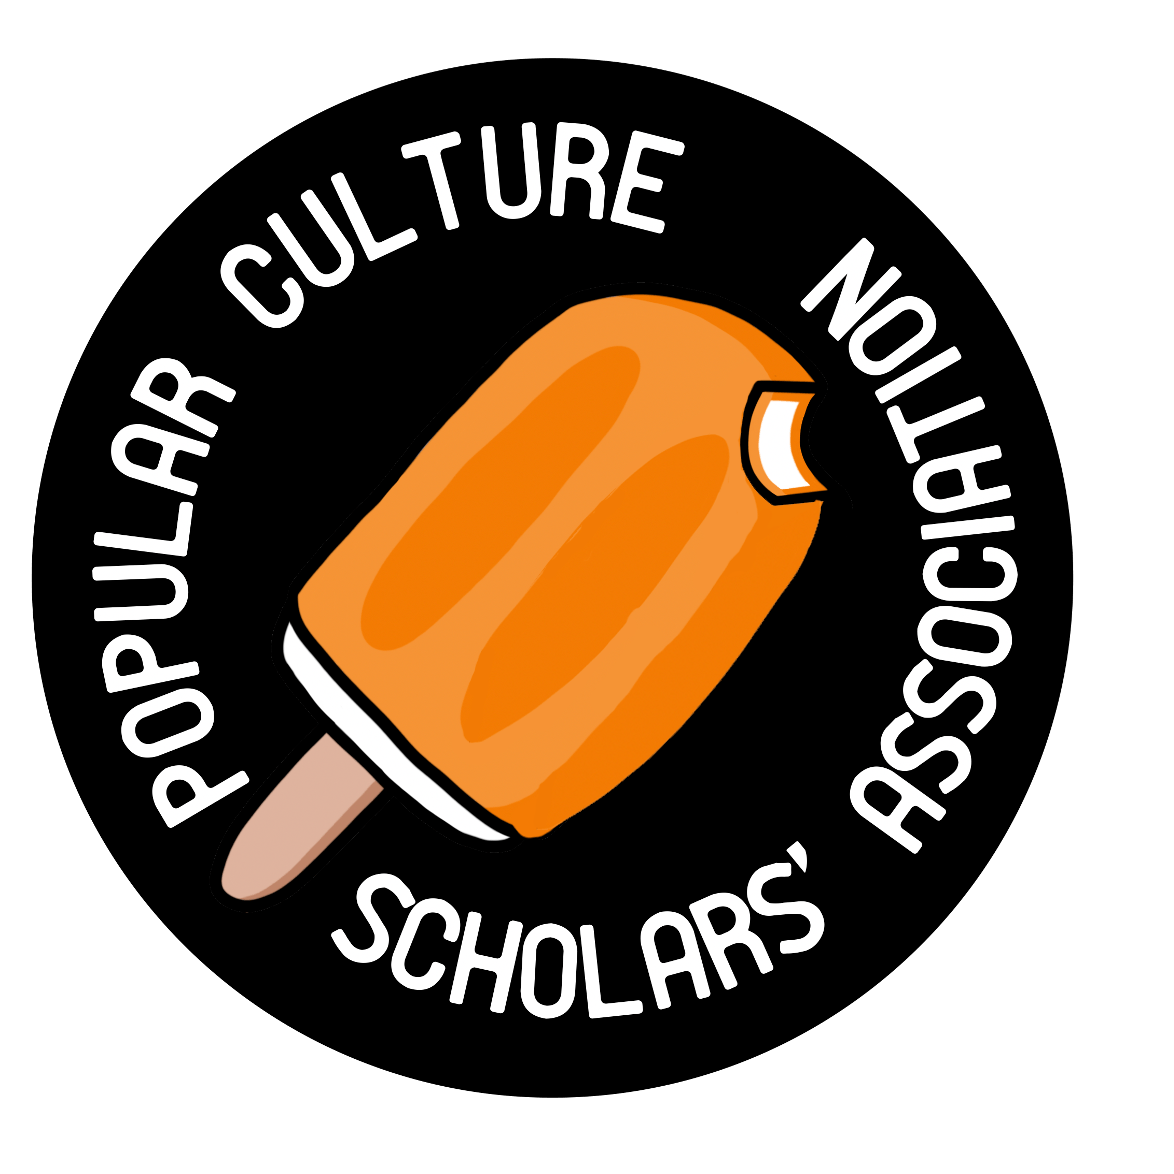 Popular Culture Scholars Association